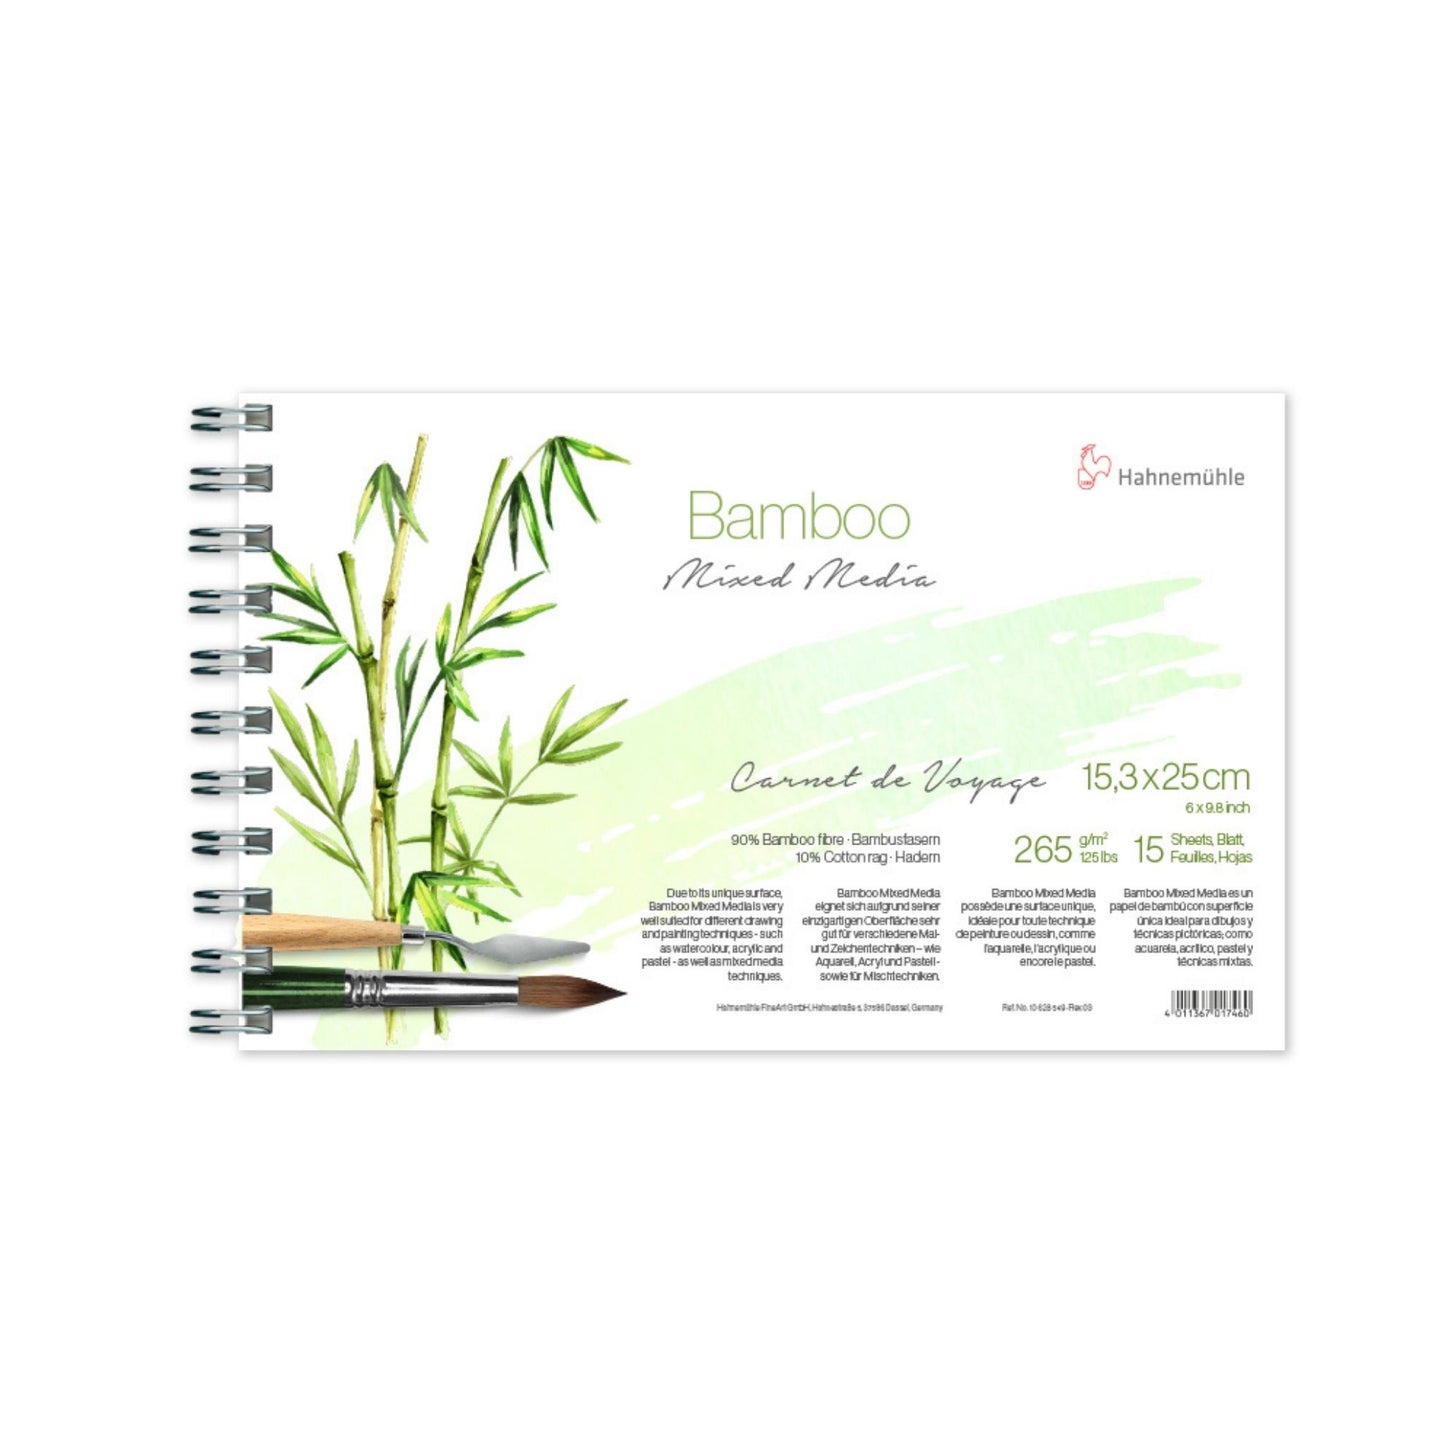 Hahnemühle Bamboo Mixed Media Zeichenpapier